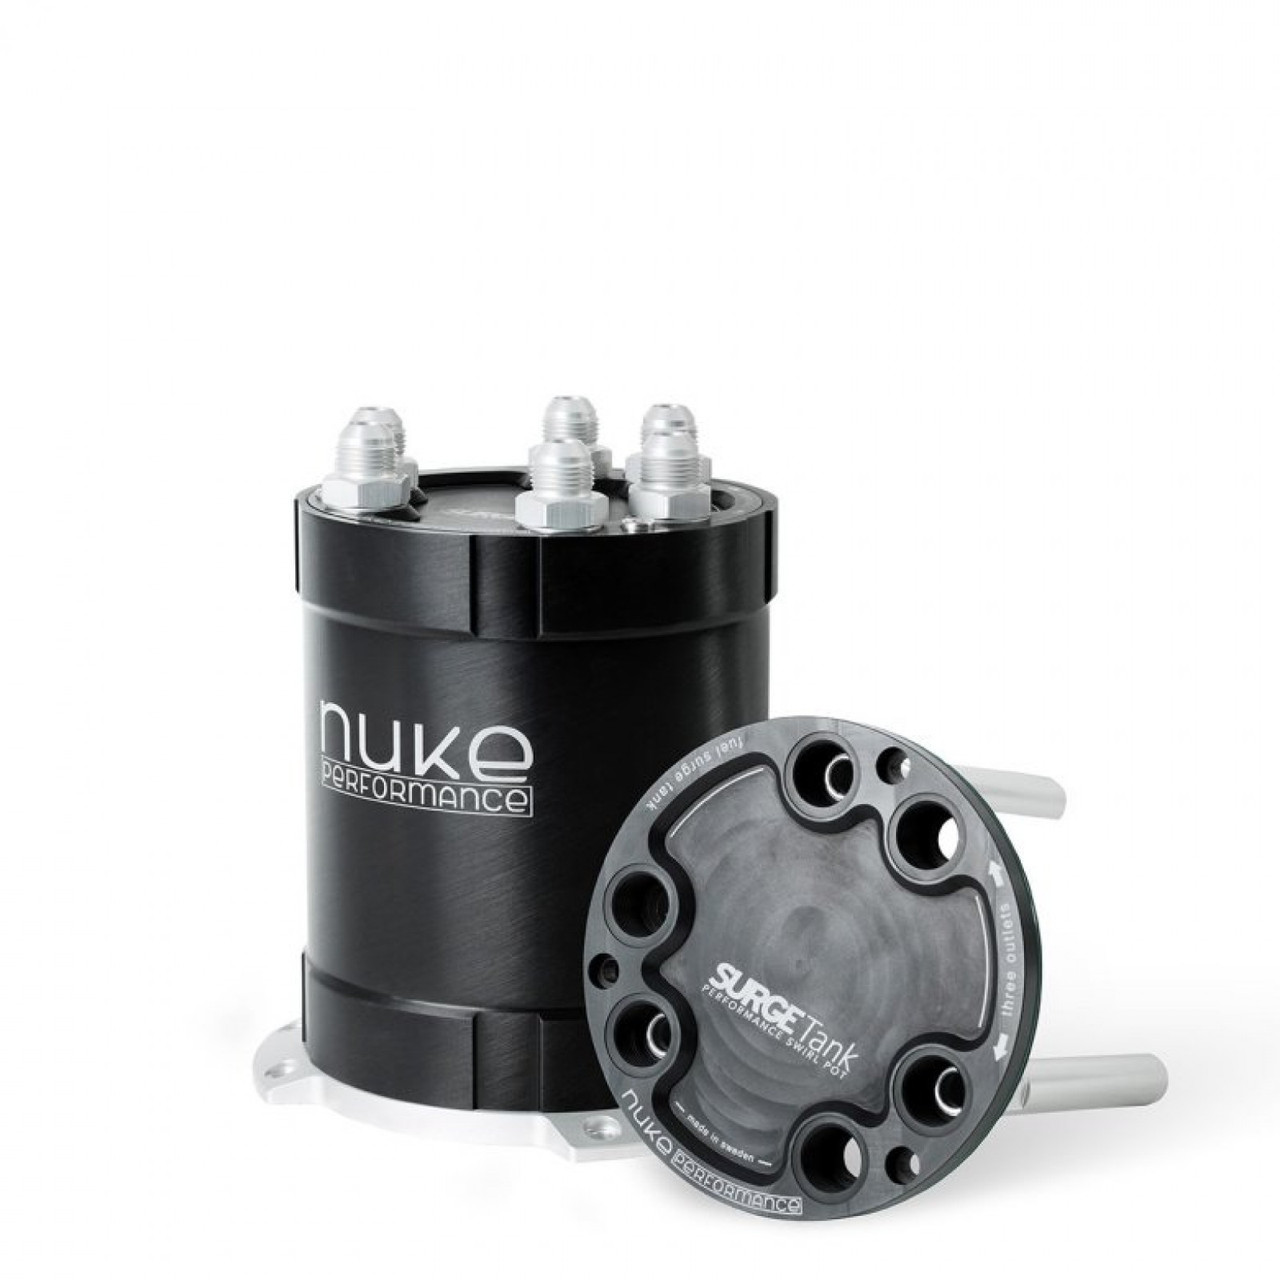 Nuke Performance 2G Fuel Surge Tank 2.0 Liter Up To 3 External Fuel Pumps (NUK-15001205)